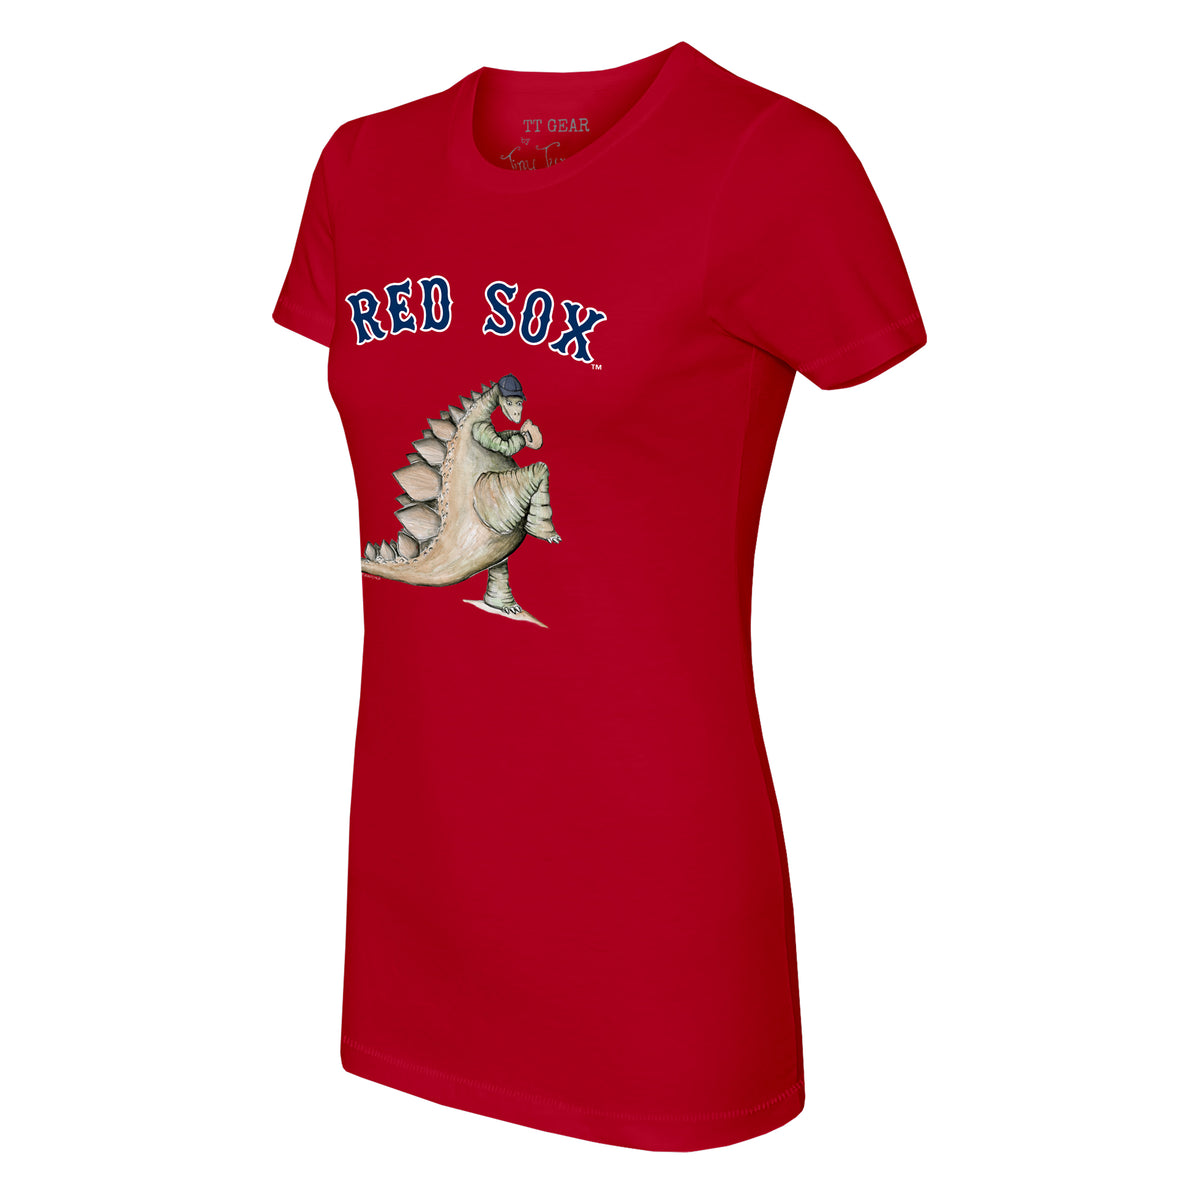 Lids Boston Red Sox Tiny Turnip Women's Baseball Babes T-Shirt - White